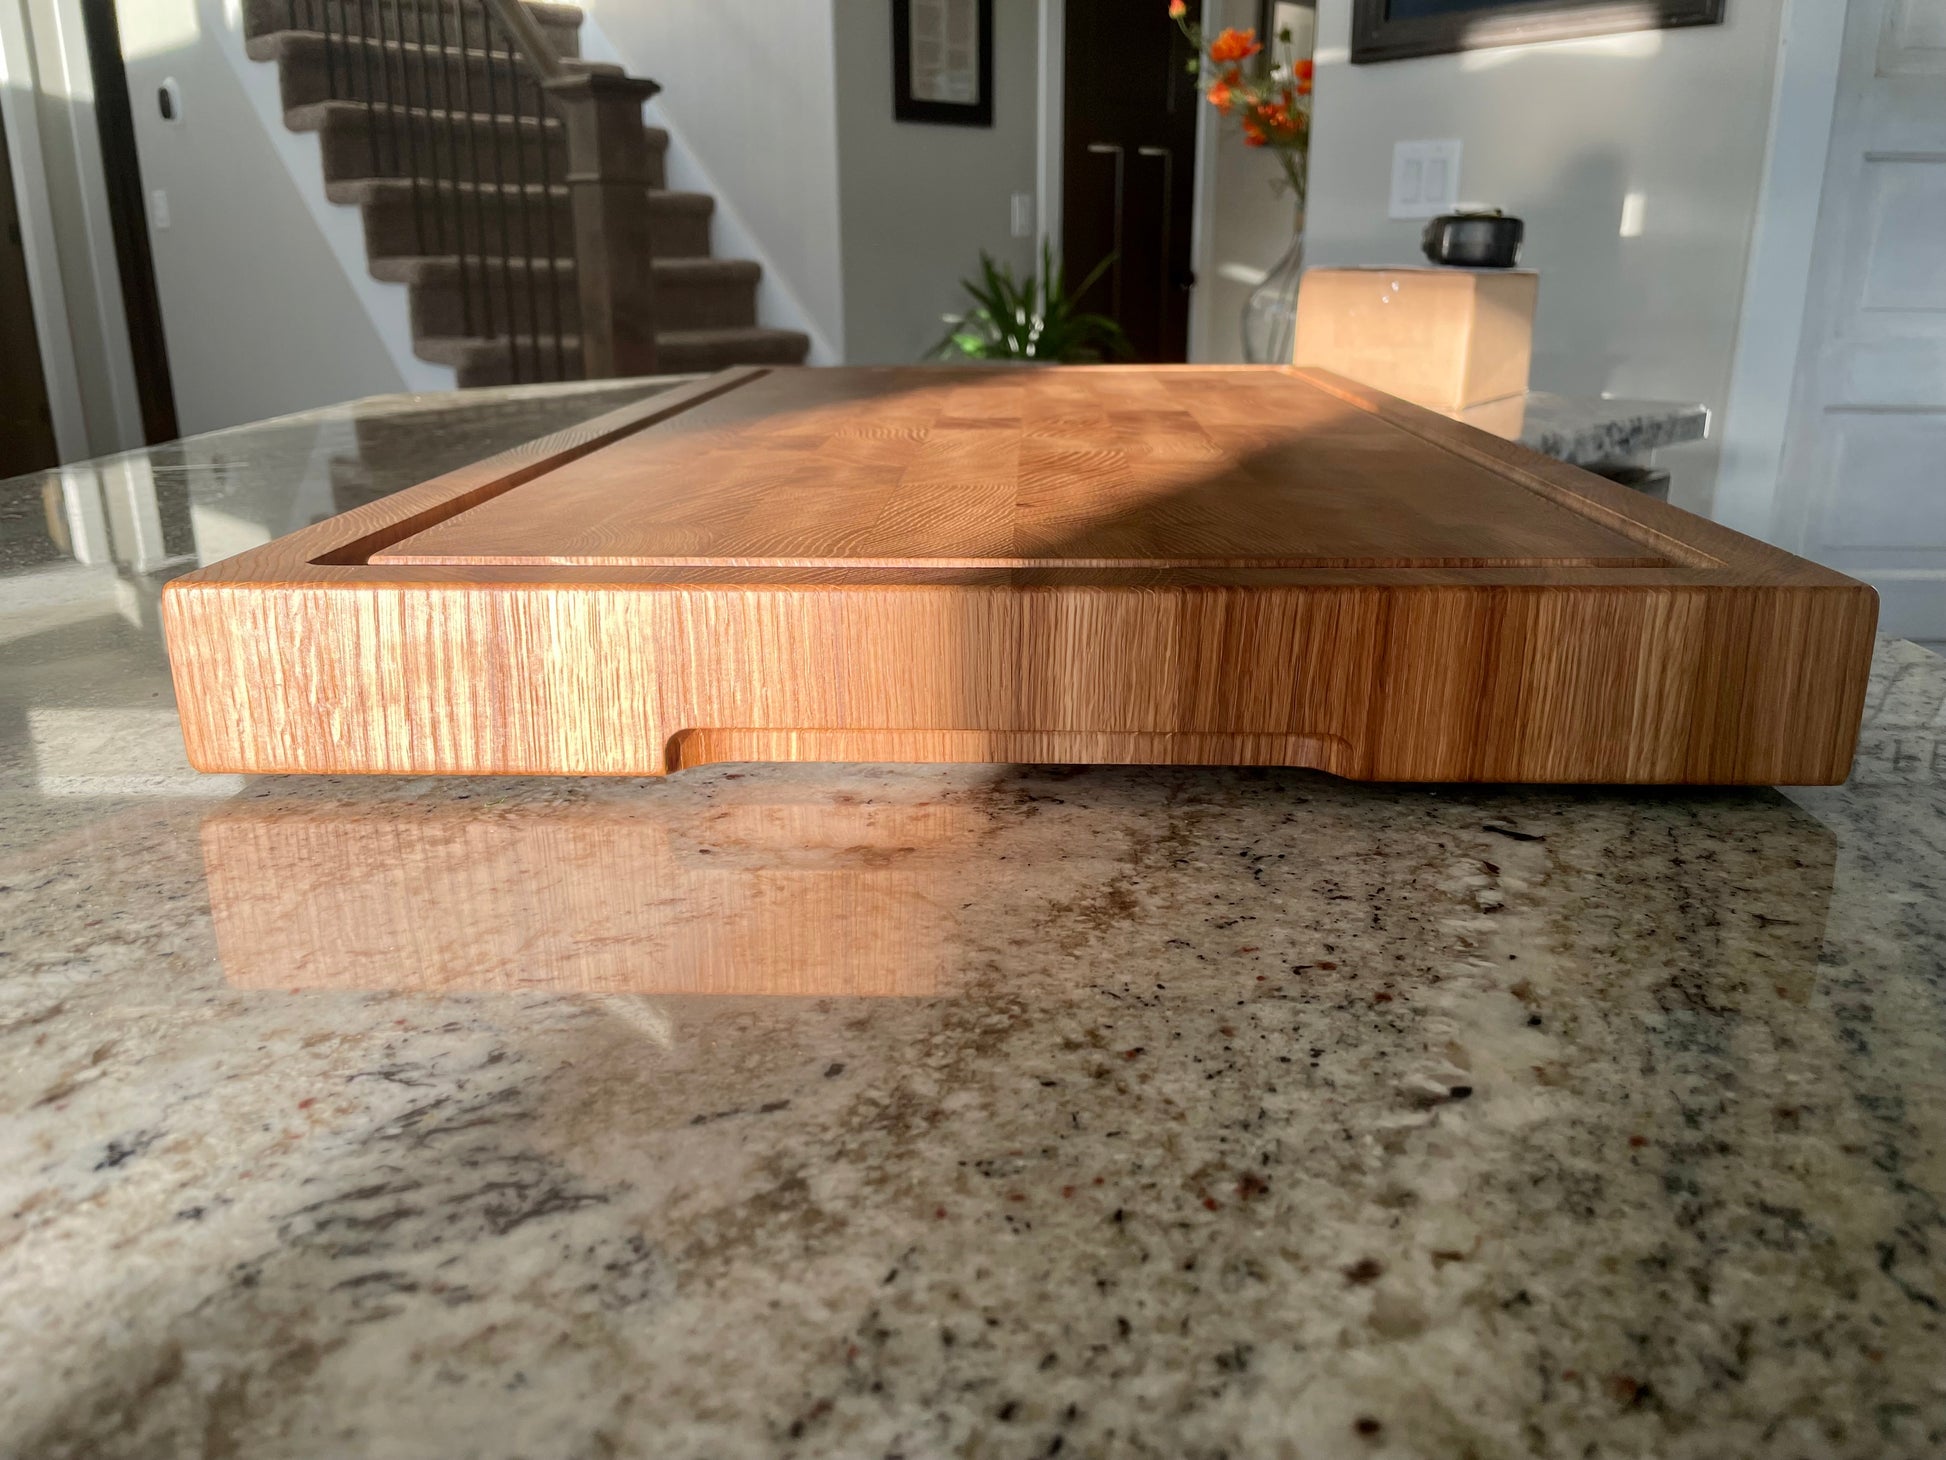 The Workhorse Extra Large Hardwood Face Grain Block Cutting Board –  Eaglecreek Boards